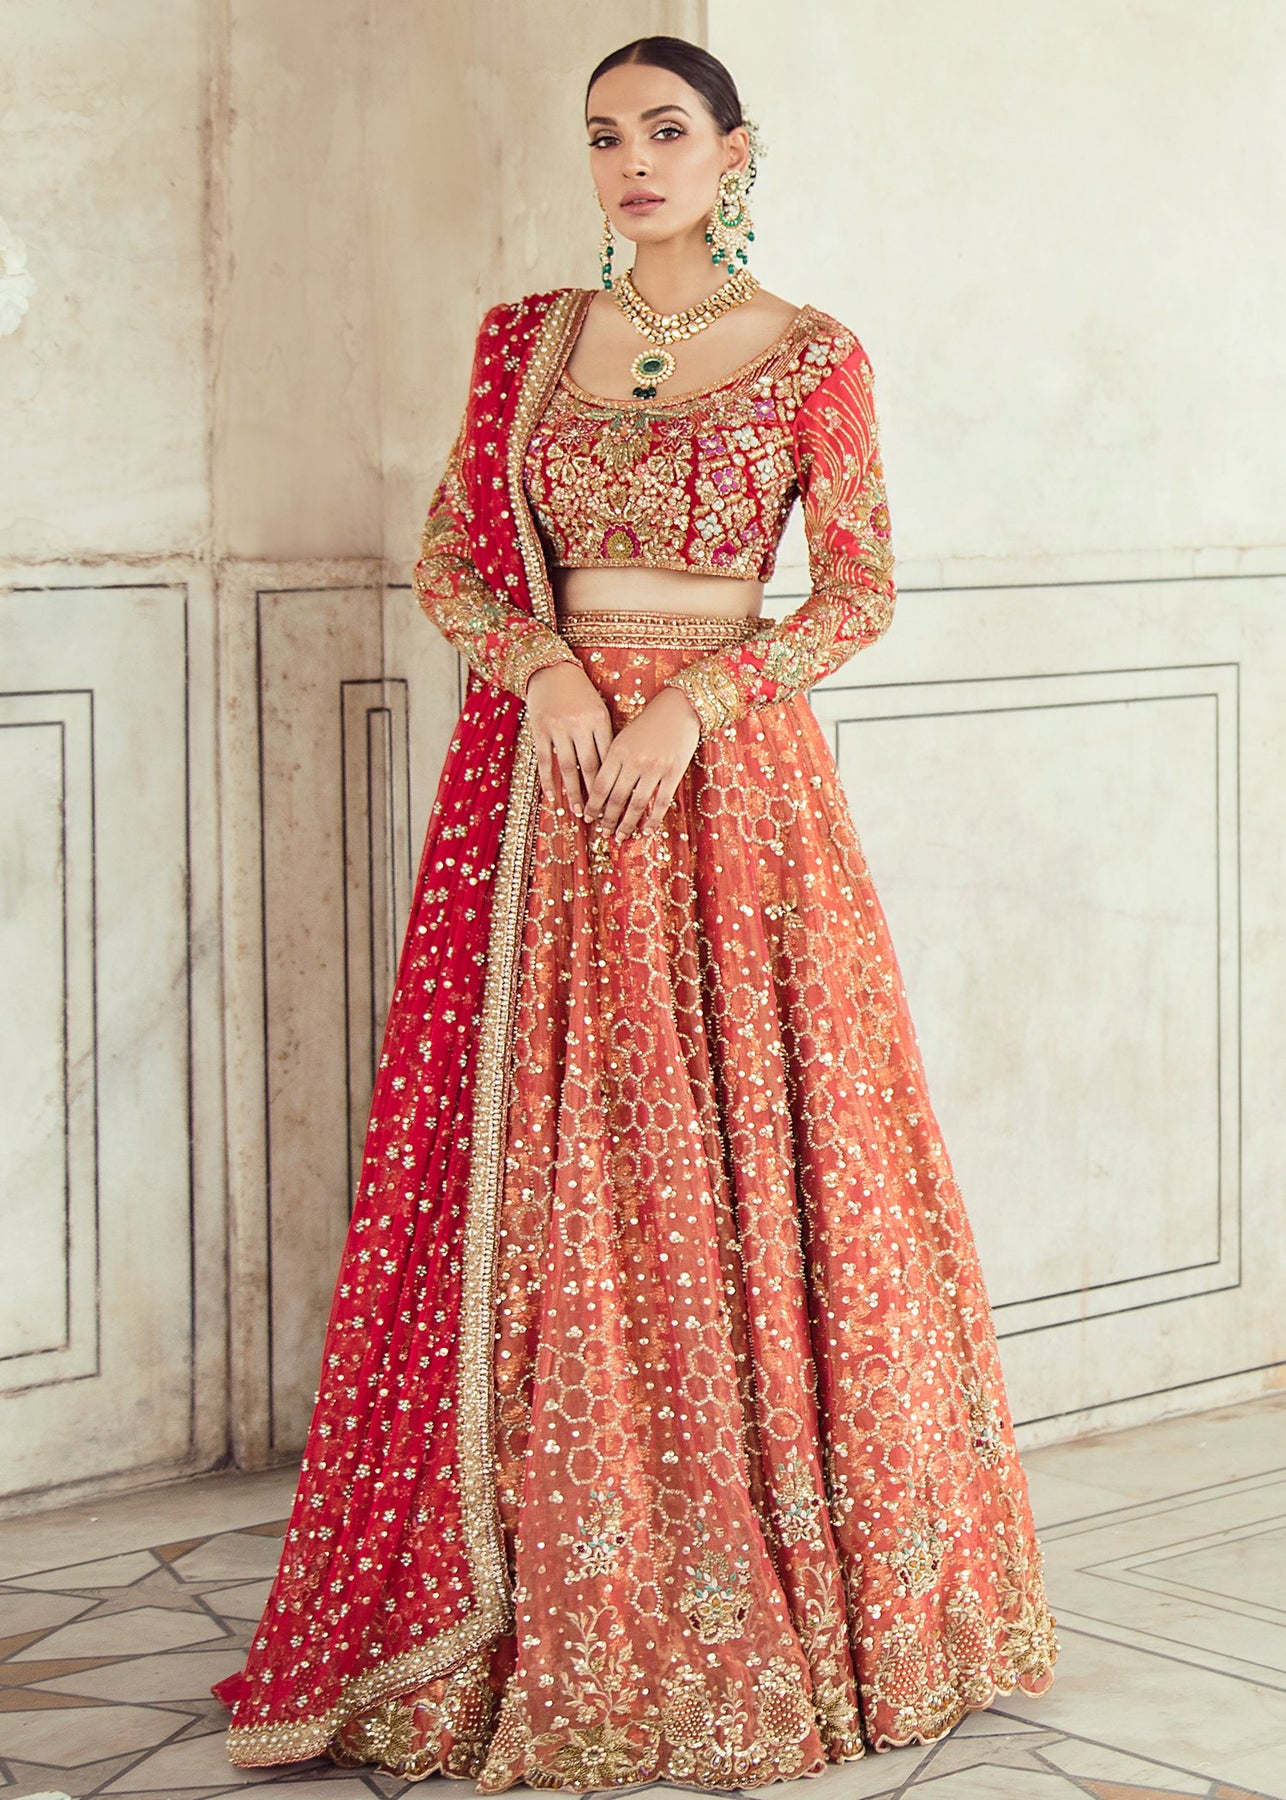 Elegant Pakistani Bridal Lehnga Dress For Wedding Nameera By Farooq 6477